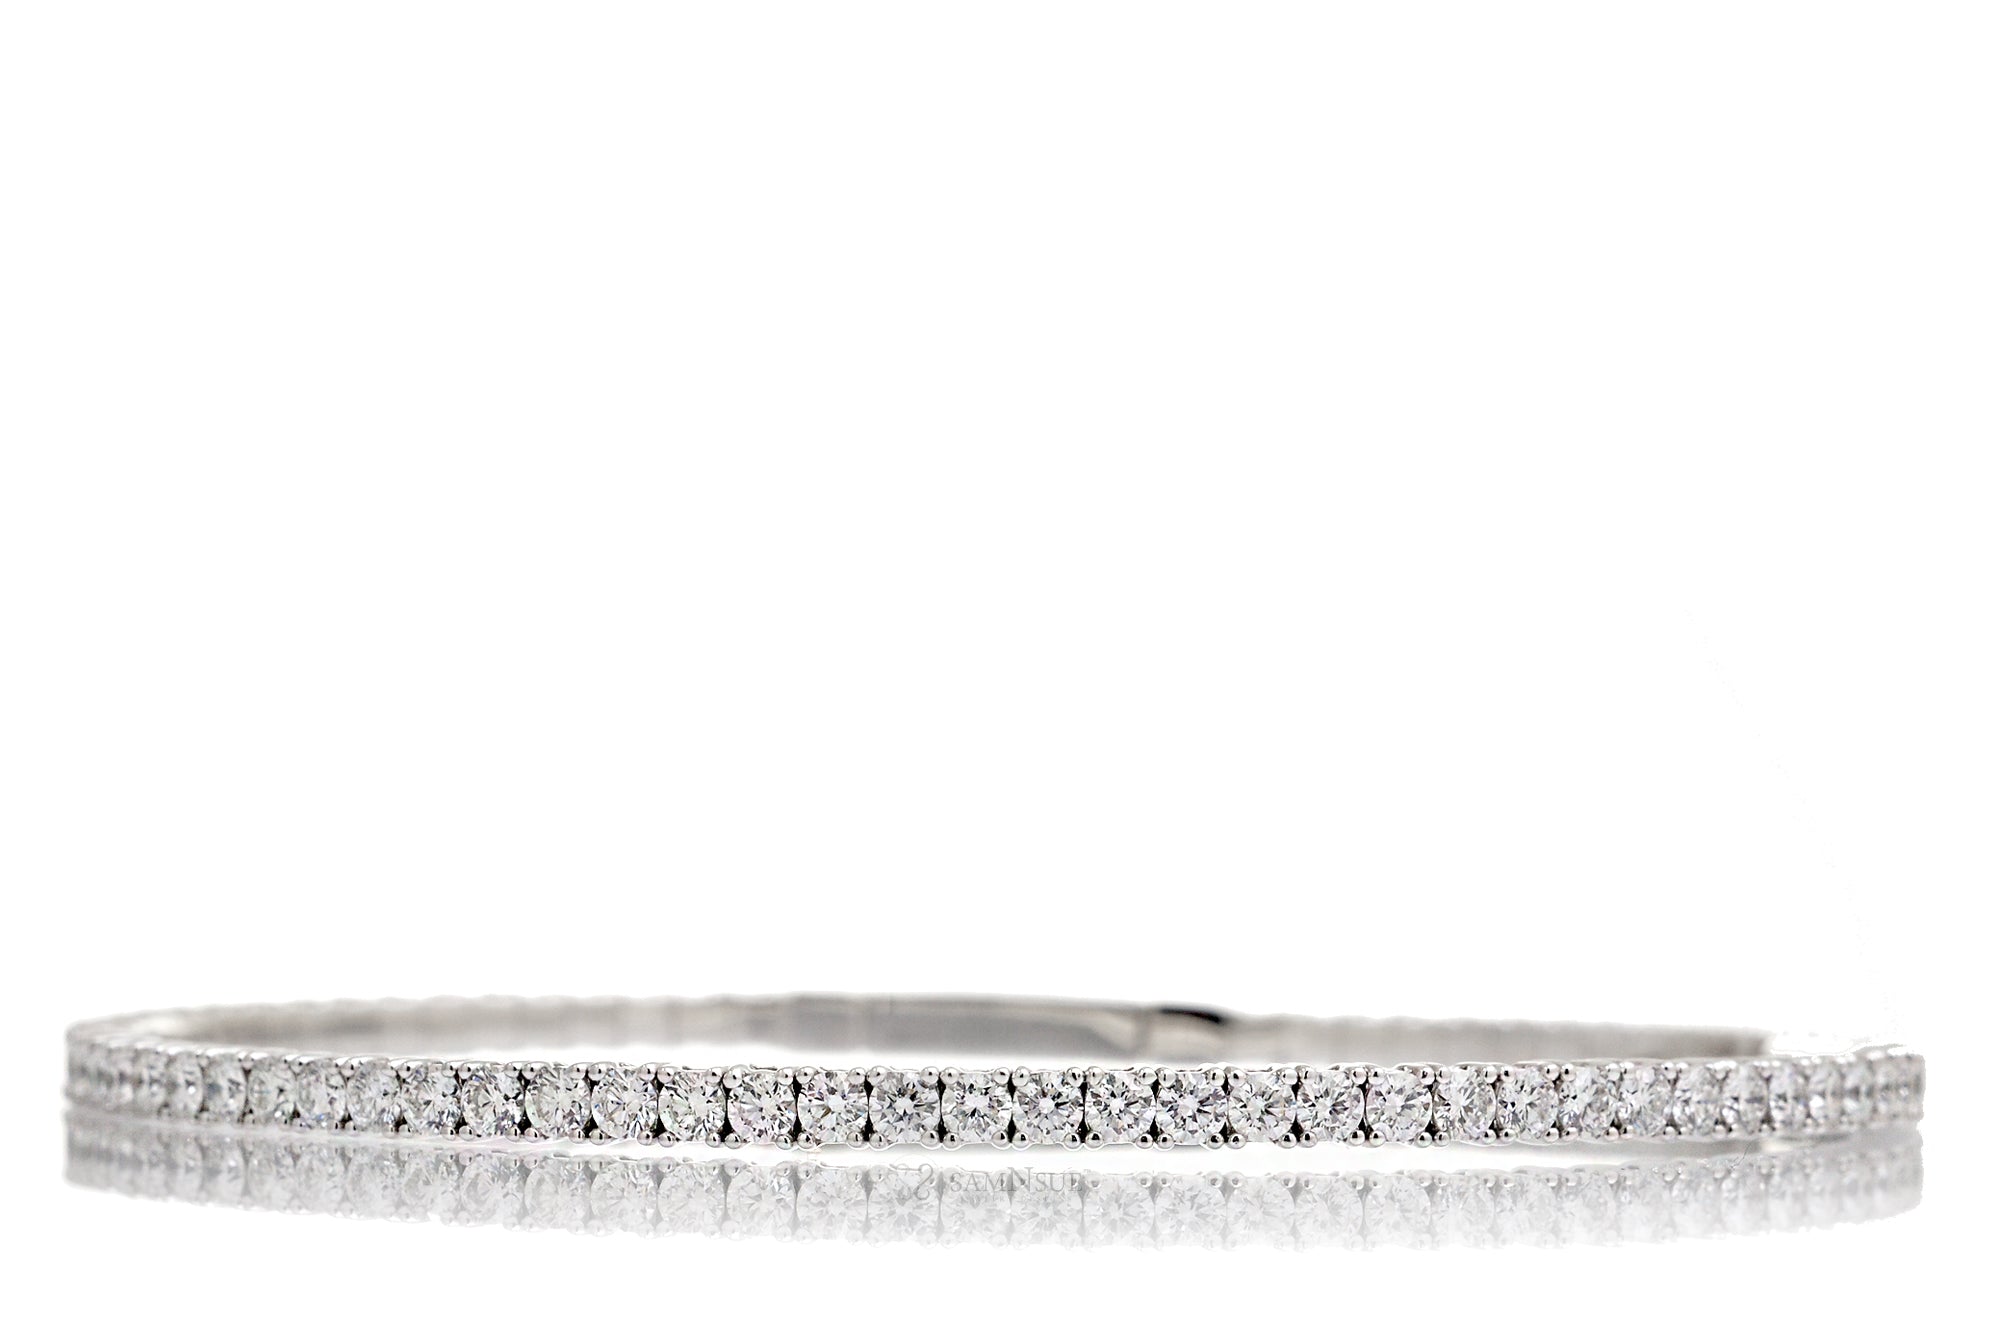 The Double Wire Semi Flexible Diamond Bracelet Bangle